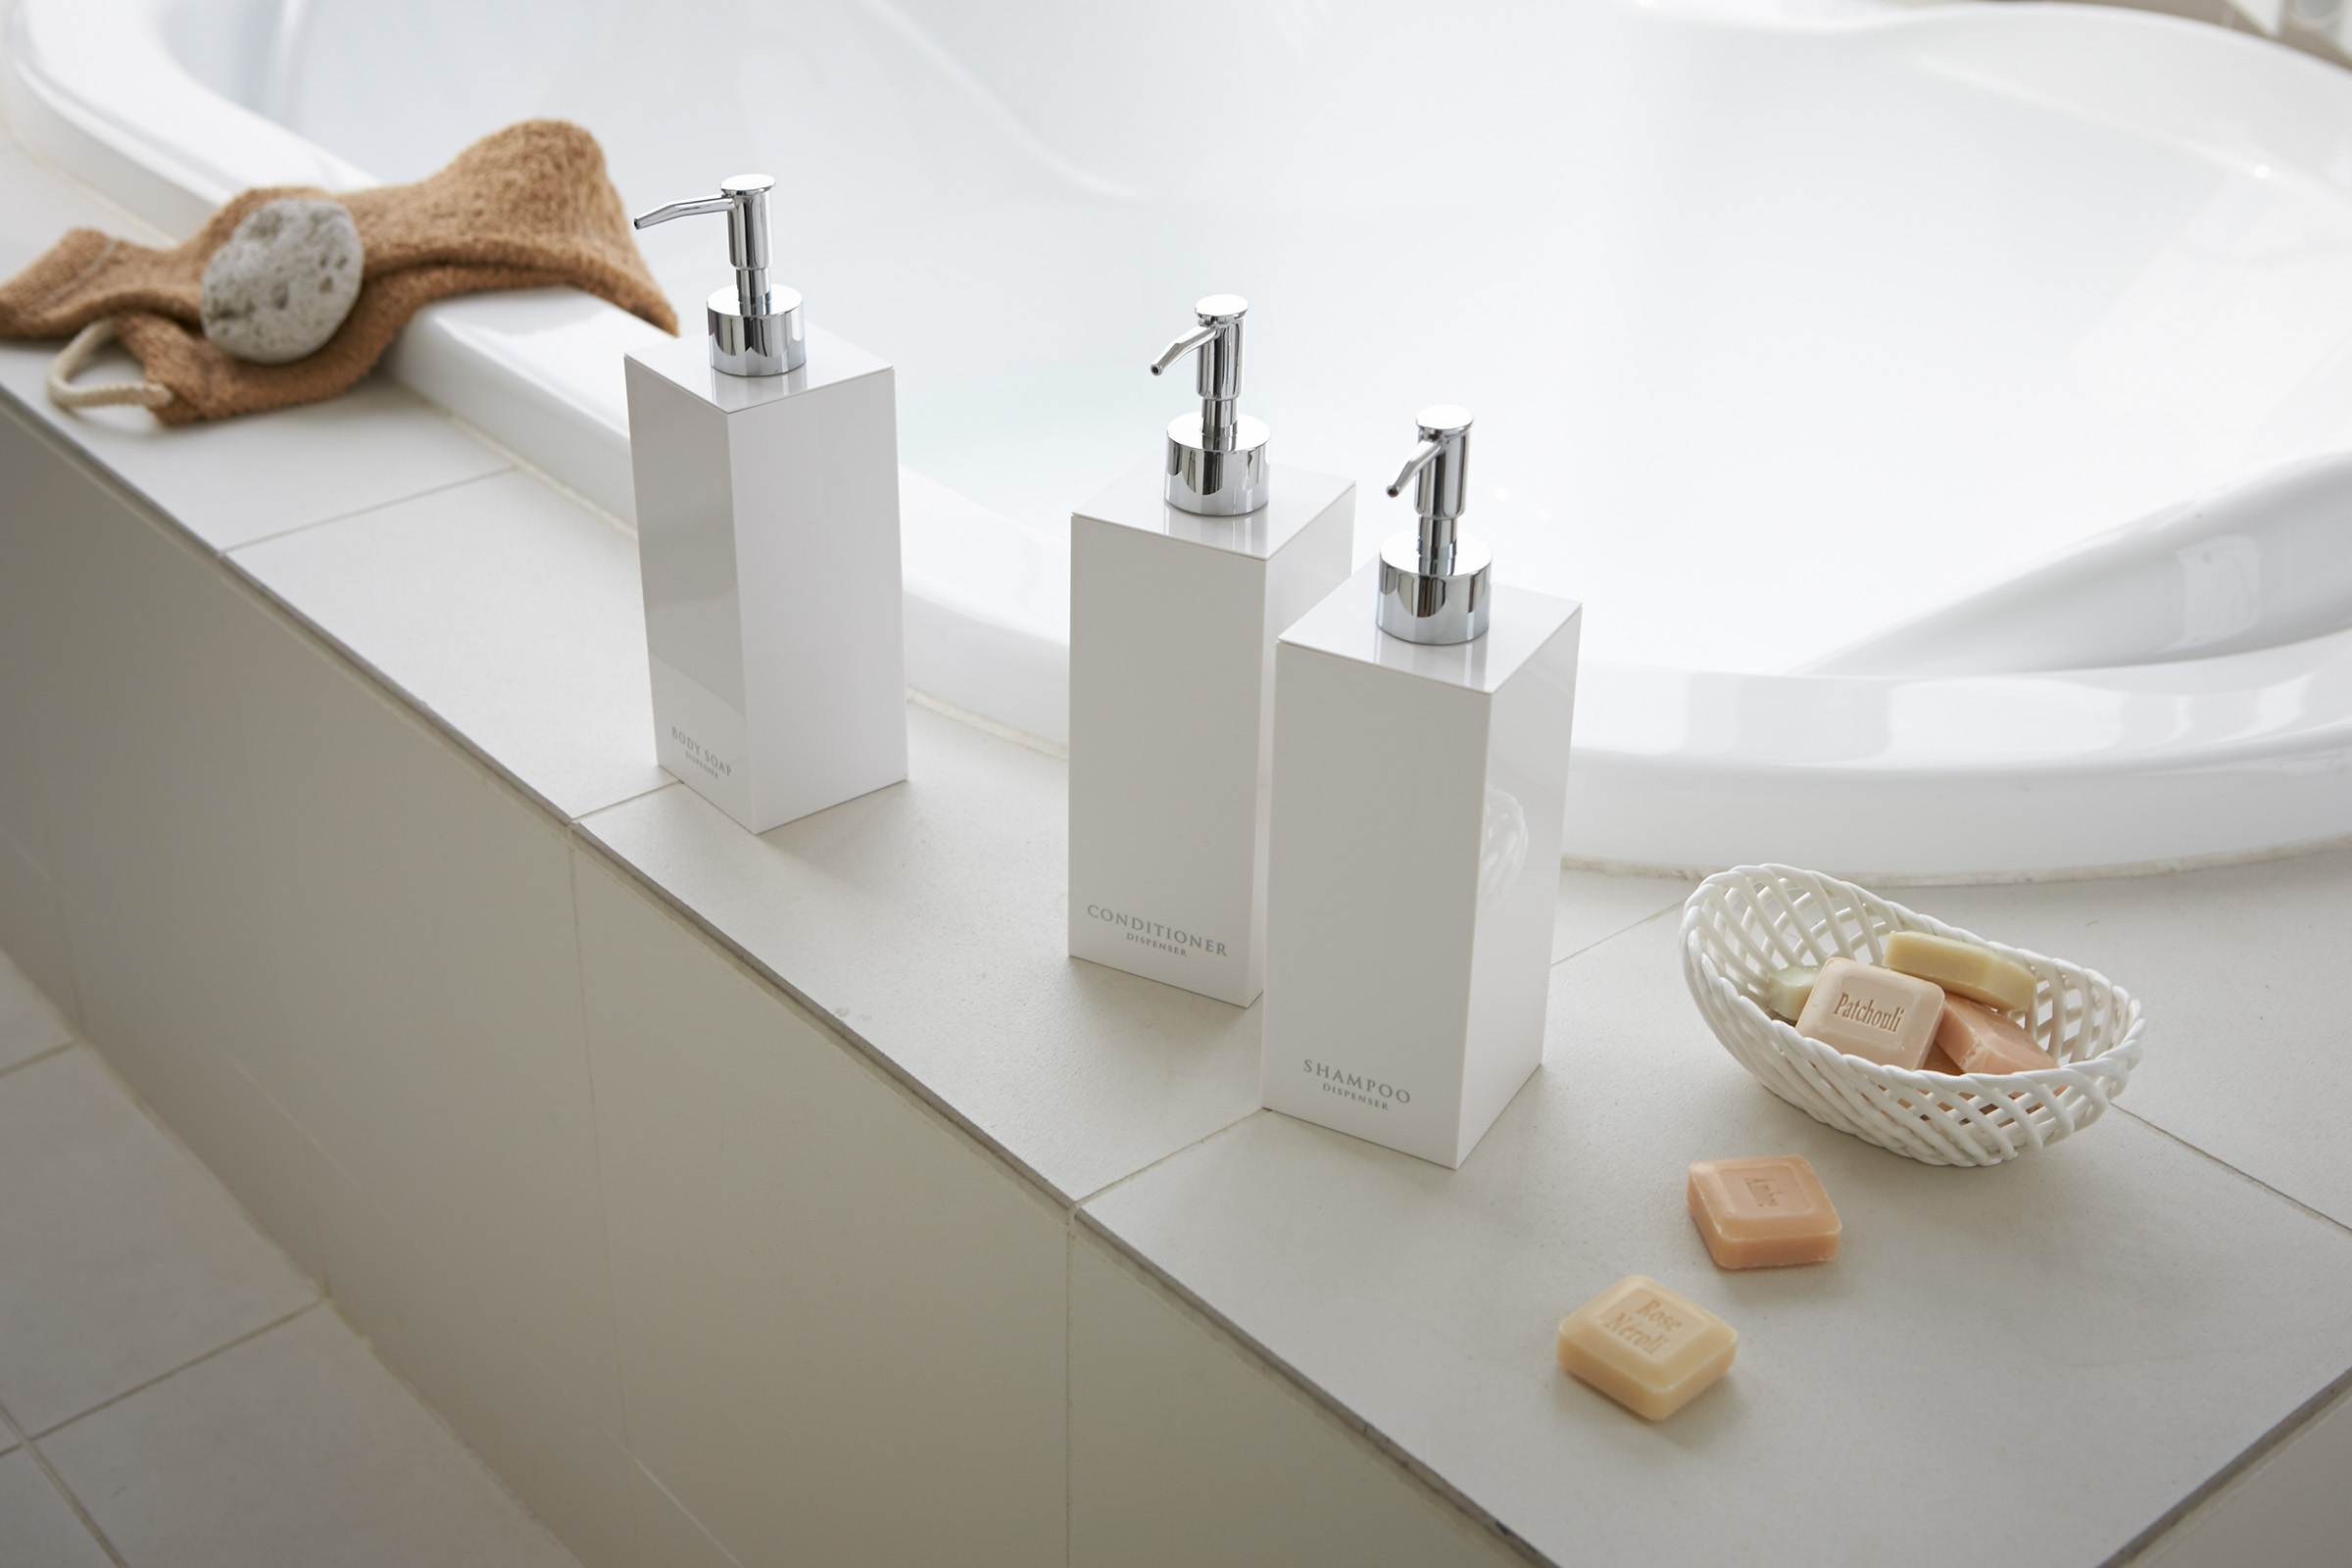 White Yamazaki Home Square soap dispenser in three styles by bathtub